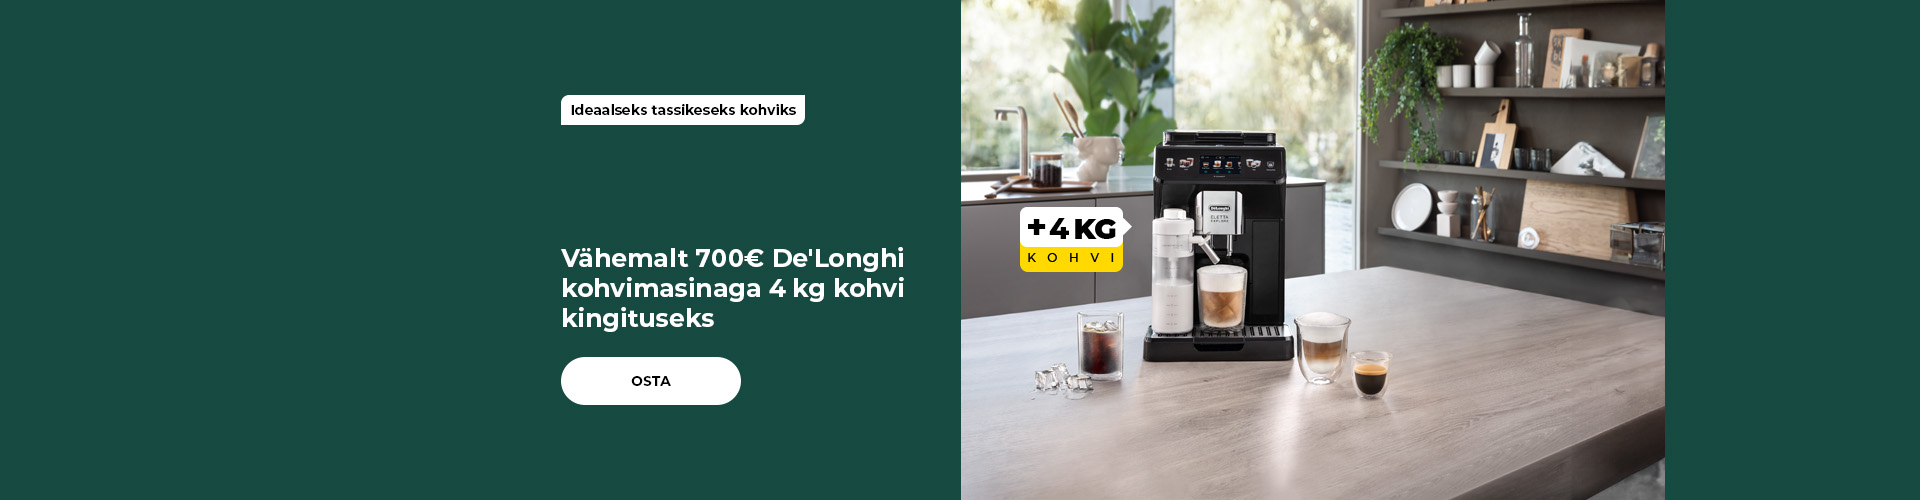 Vähemalt 700€ De'Longhi kohvimasinaga 4 kg kohvi kingituseks